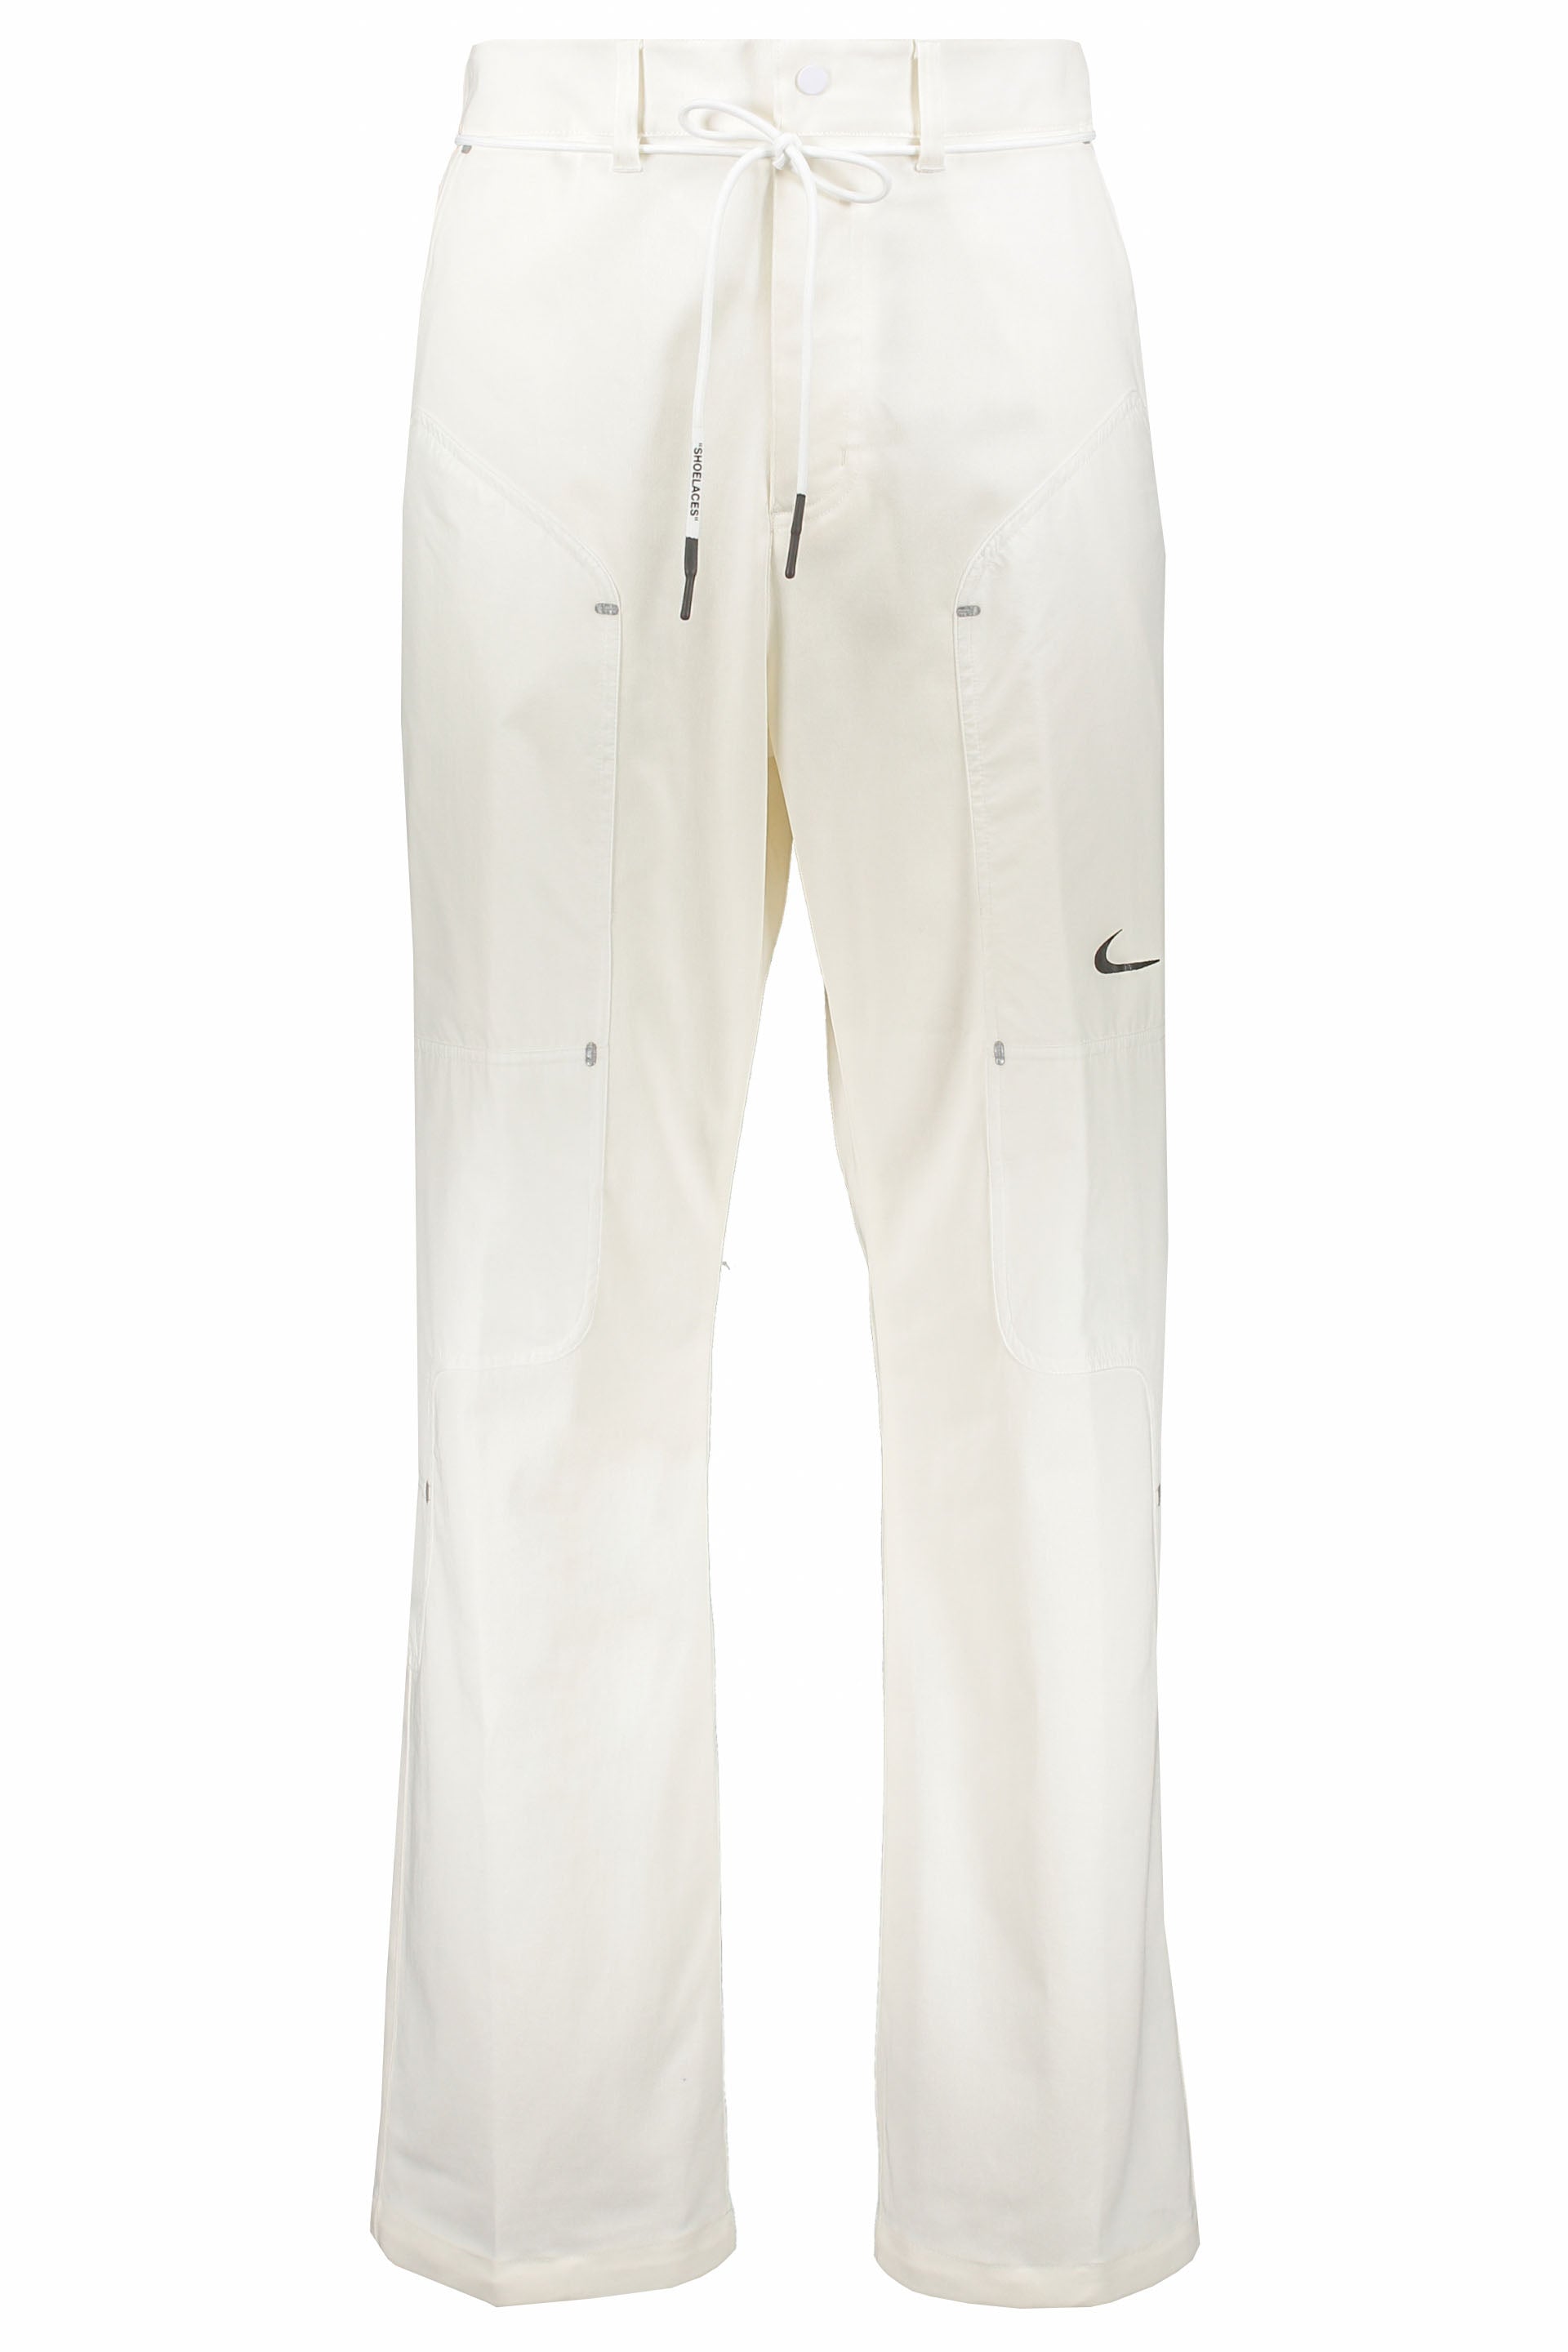 Nike x Off-White track-pants